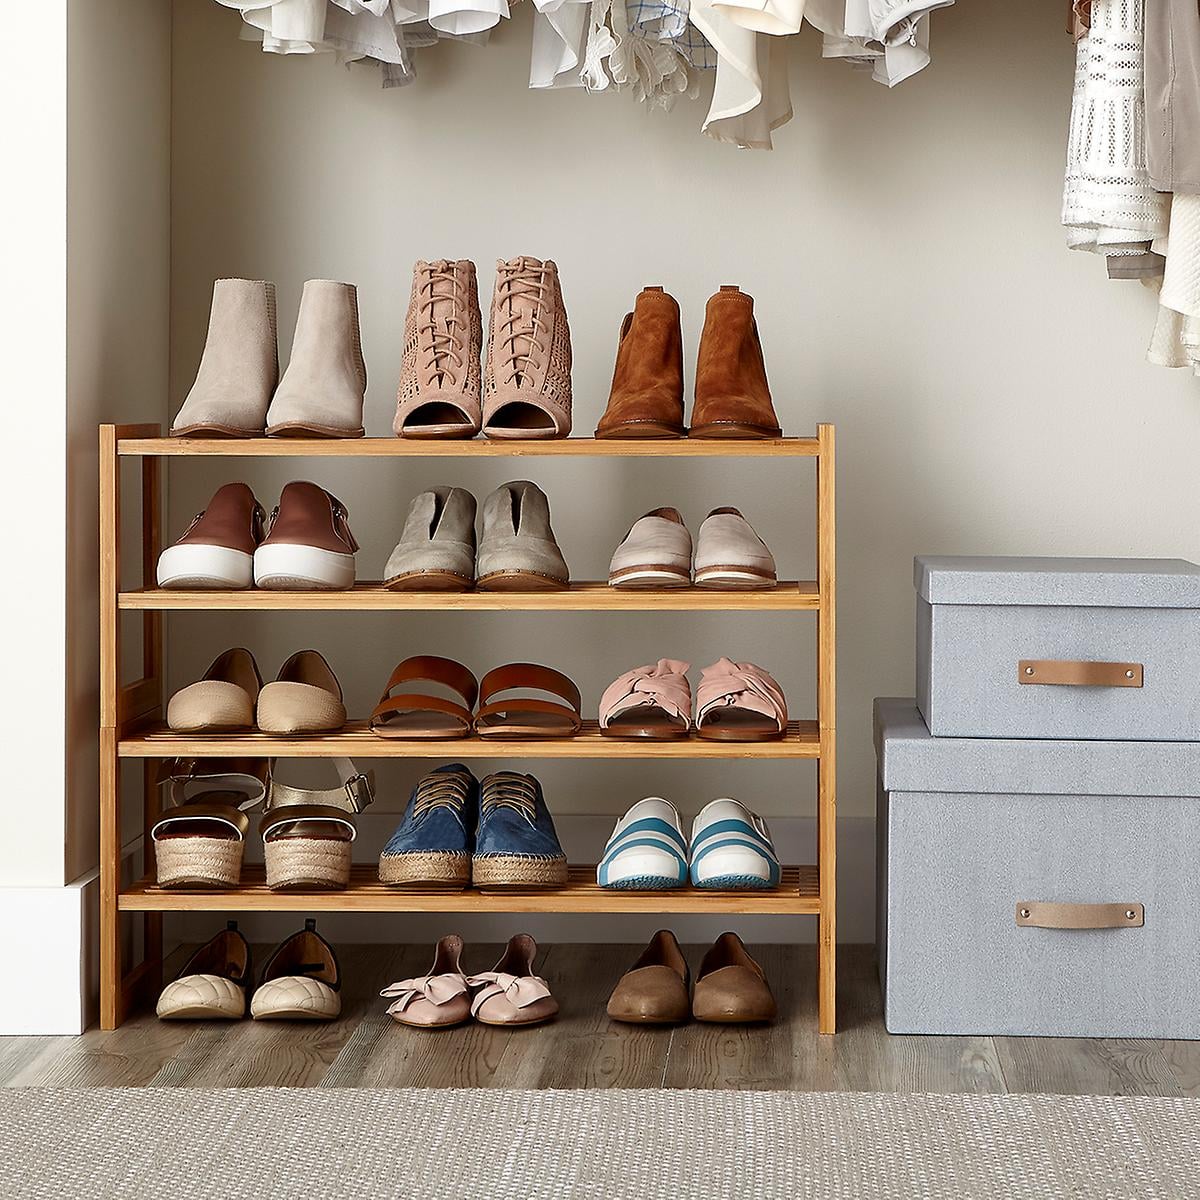 Идеи хранения обуви в шкафу